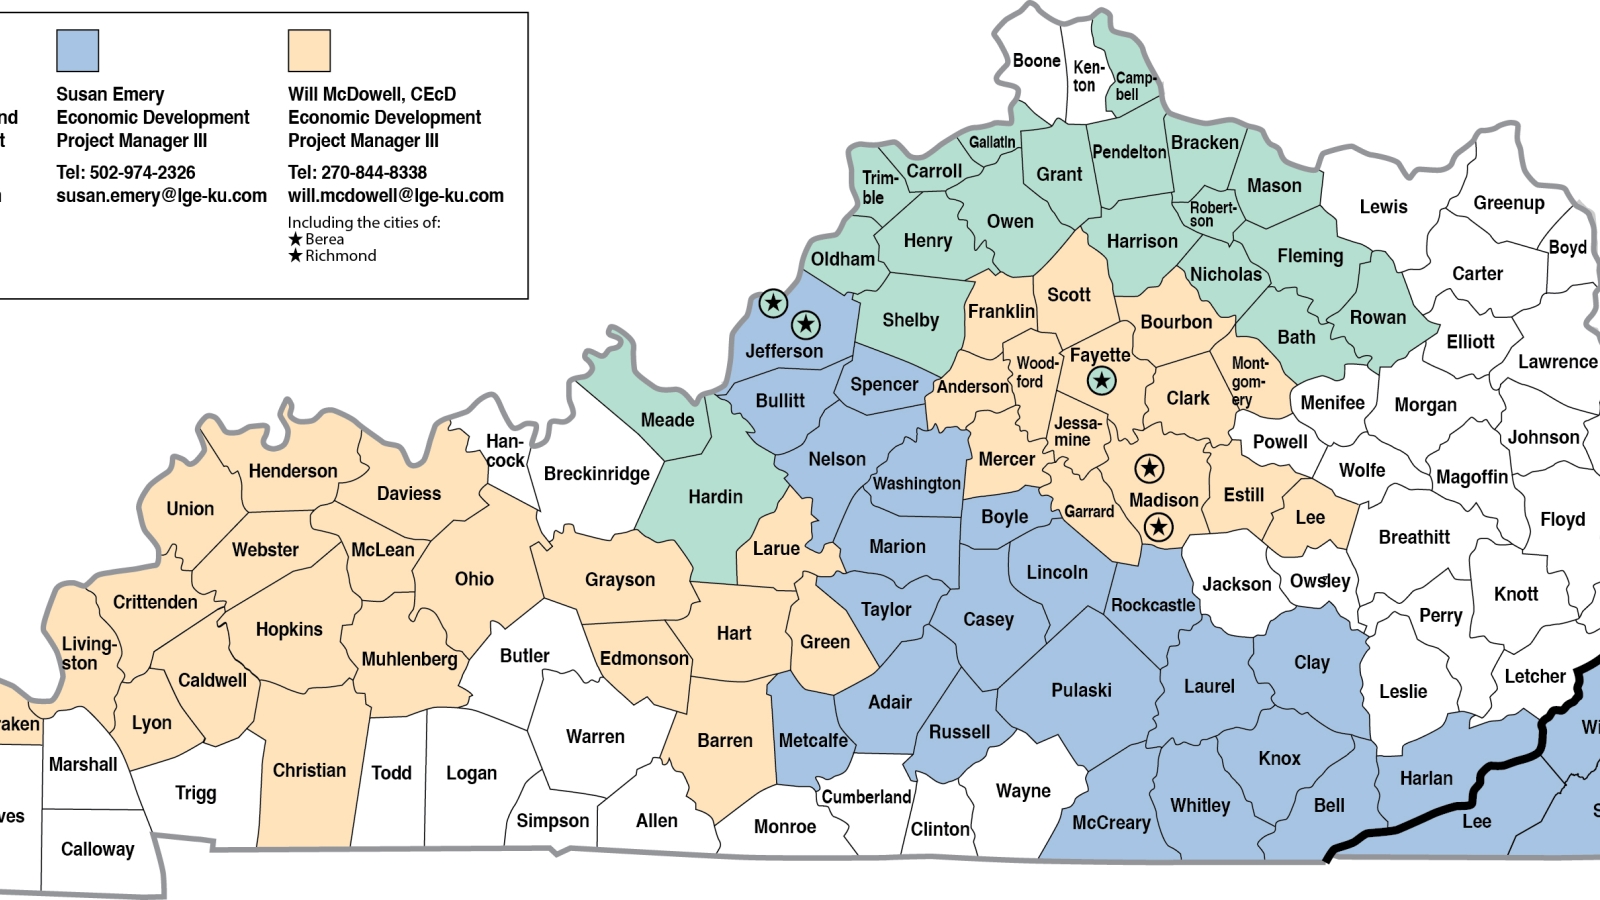 Economic Development Managers County Map